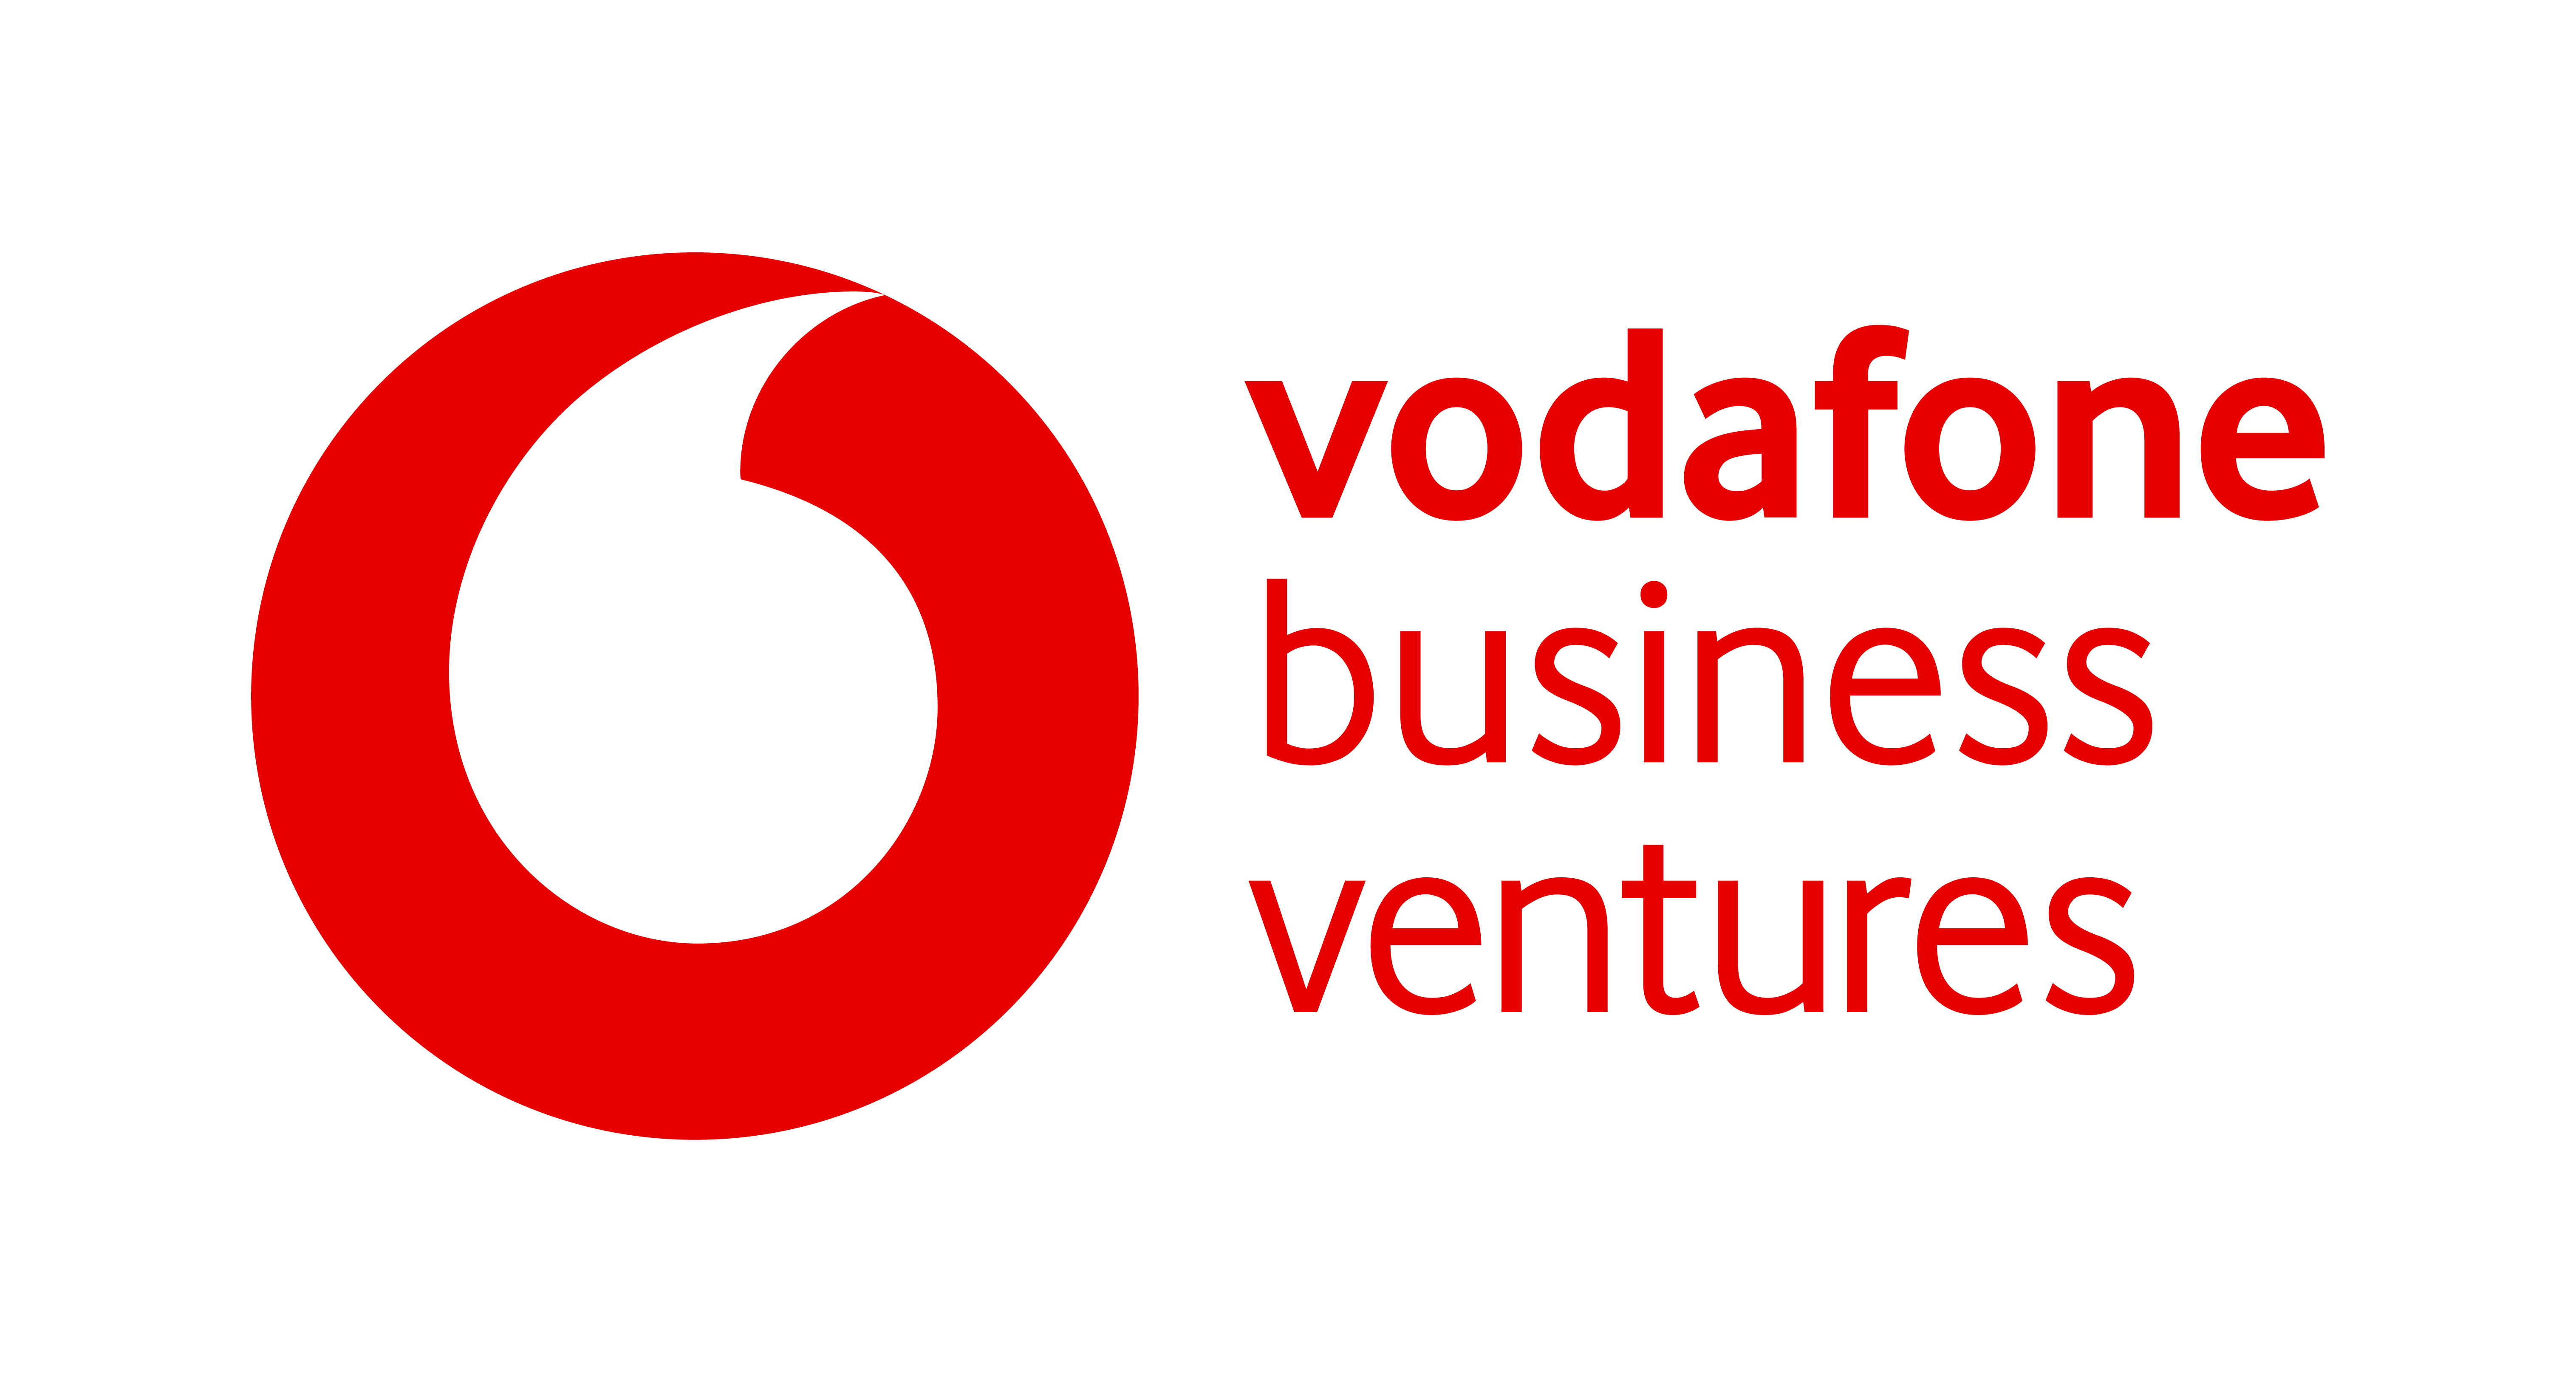 Vodafone Business Ventures